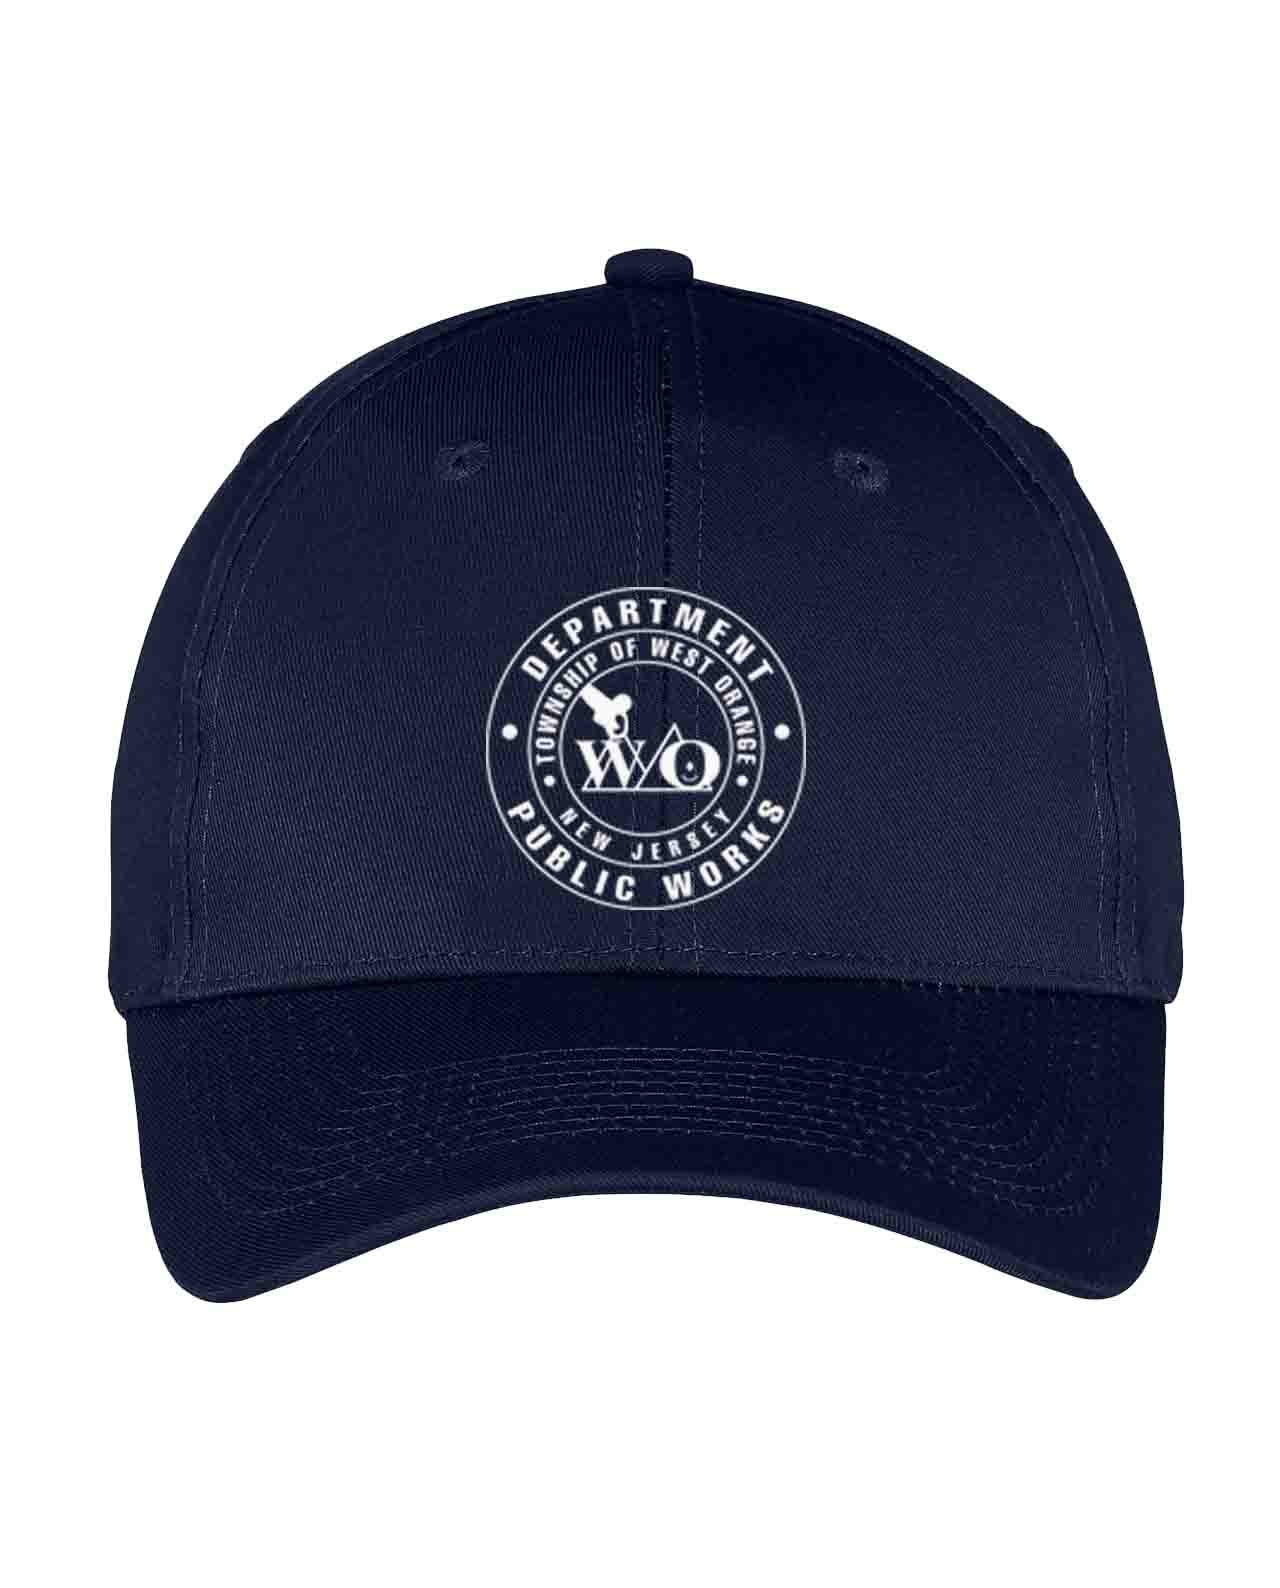 West Orange DPW Caps